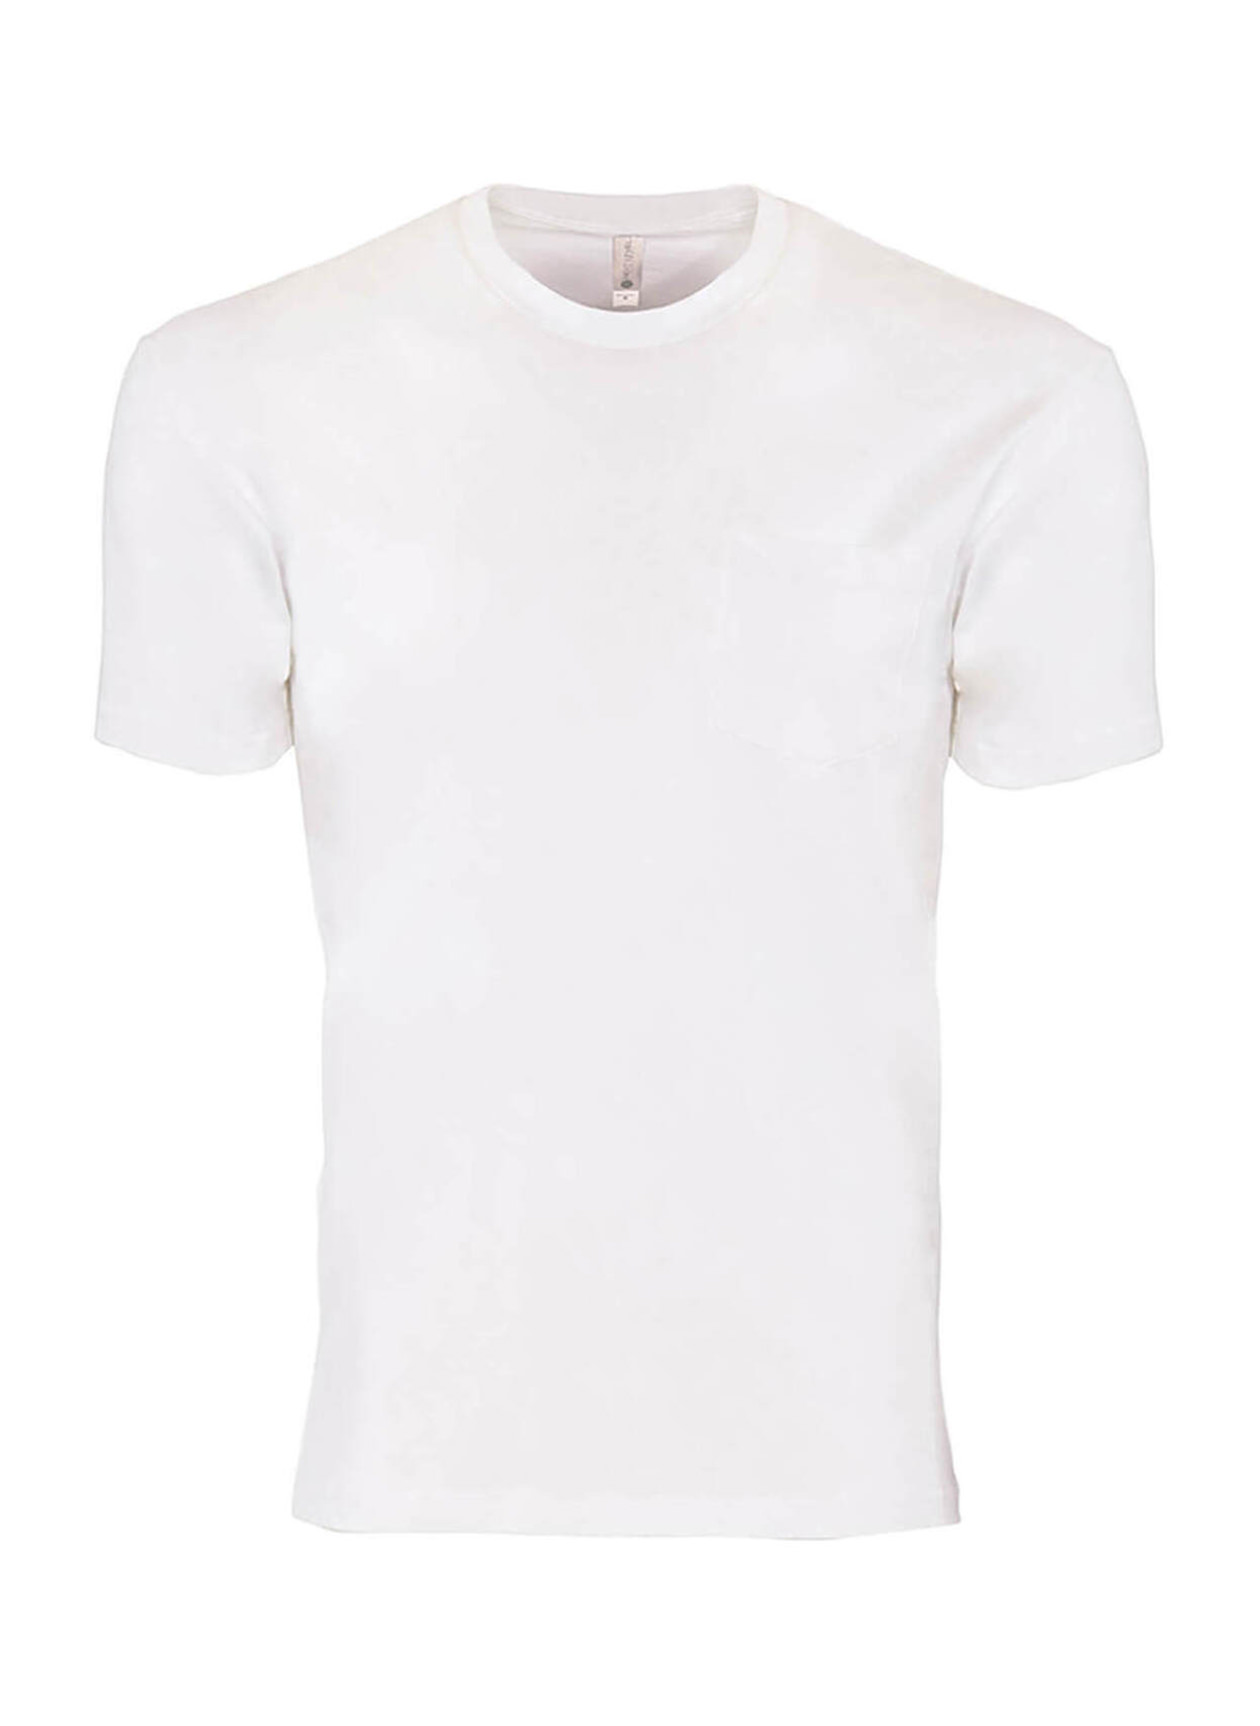 Next Level Men's White Unisex Pocket Crew T-Shirt